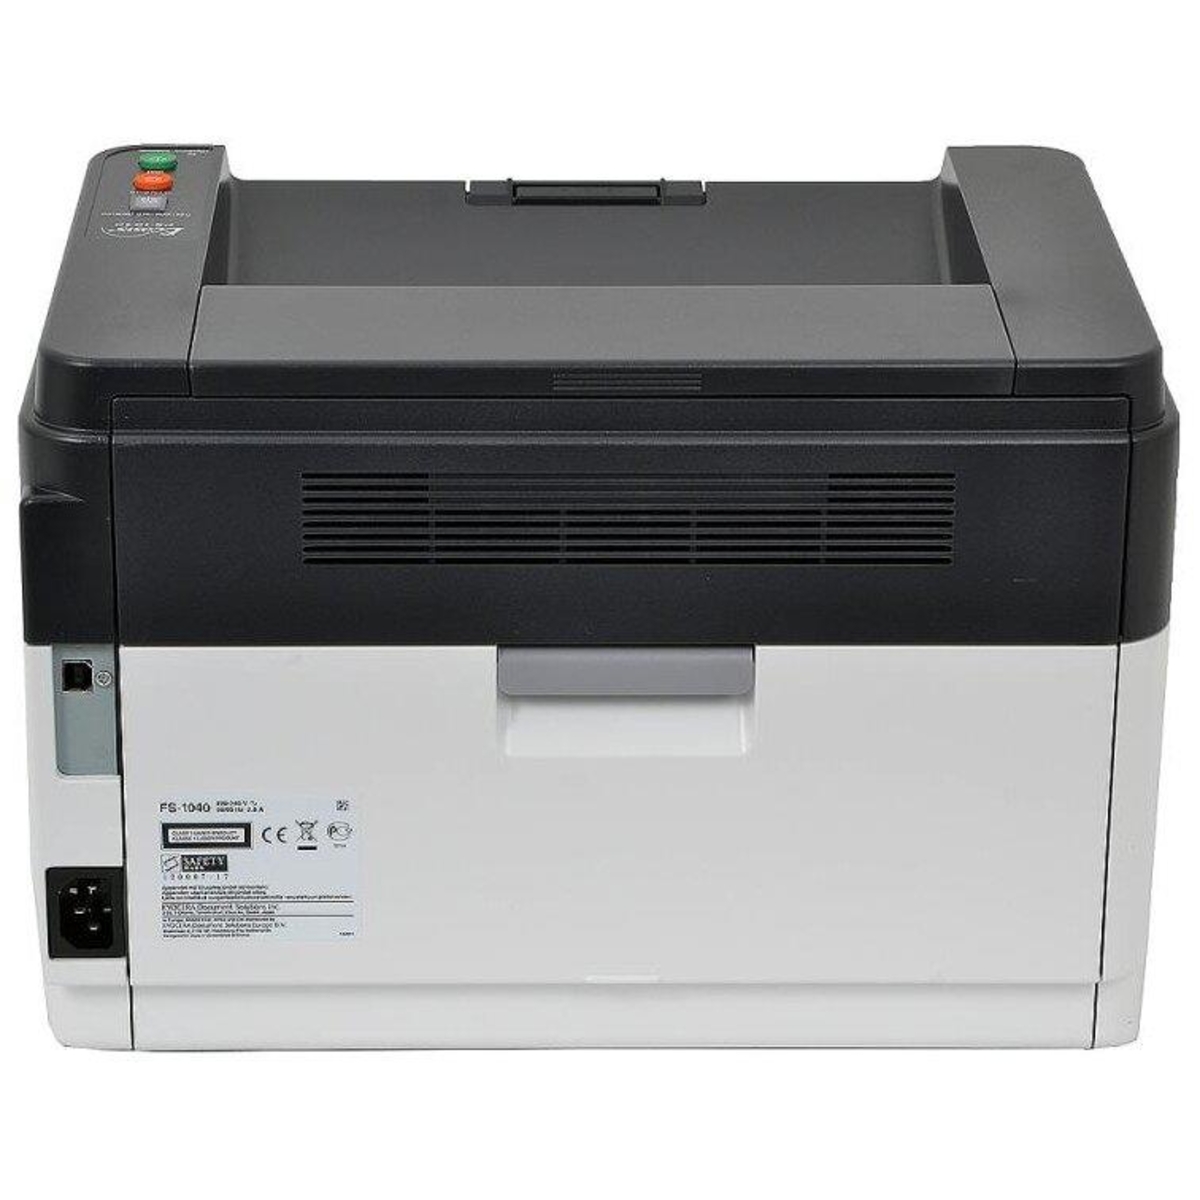 Купить картридж для принтера kyocera. Принтер Kyocera FS-1040. Принтер куосера FS 1040. Принтер лазерный Kyocera FS-1060dn. Kyocera 1060 DN.